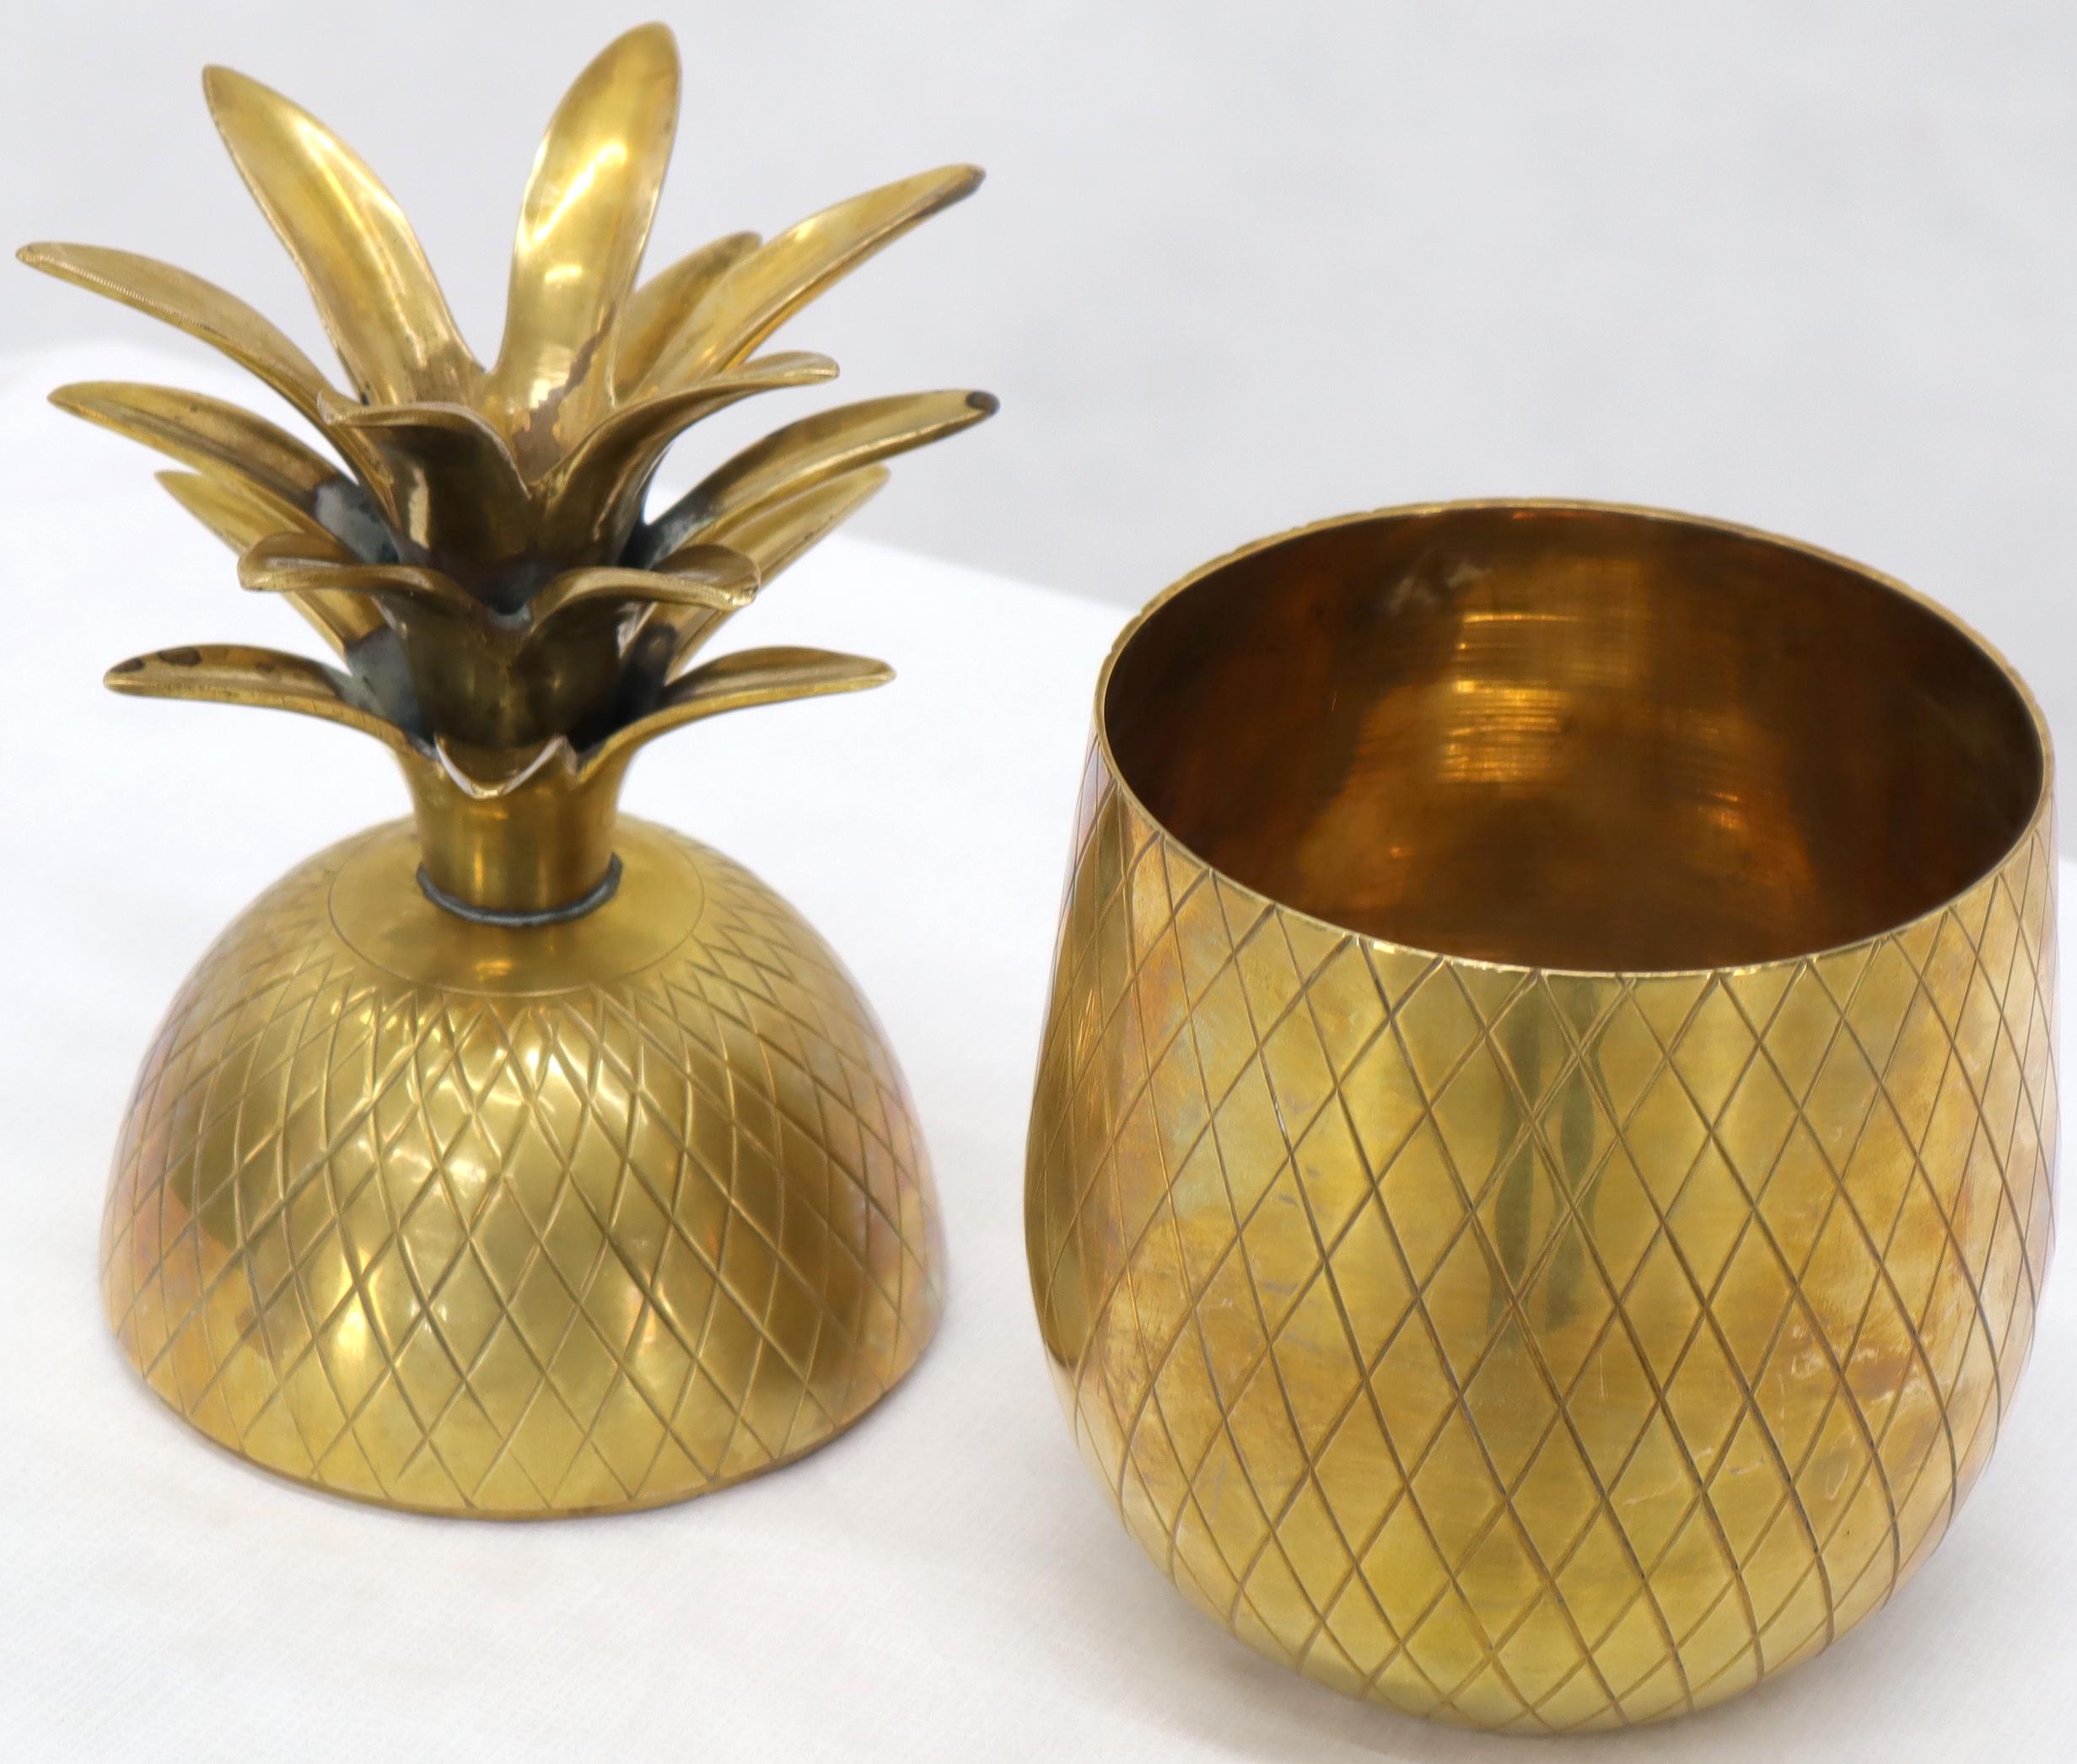 Fine craftsmanship solid brass pineapple shape jar vessel. Parzinger decor accent piece.